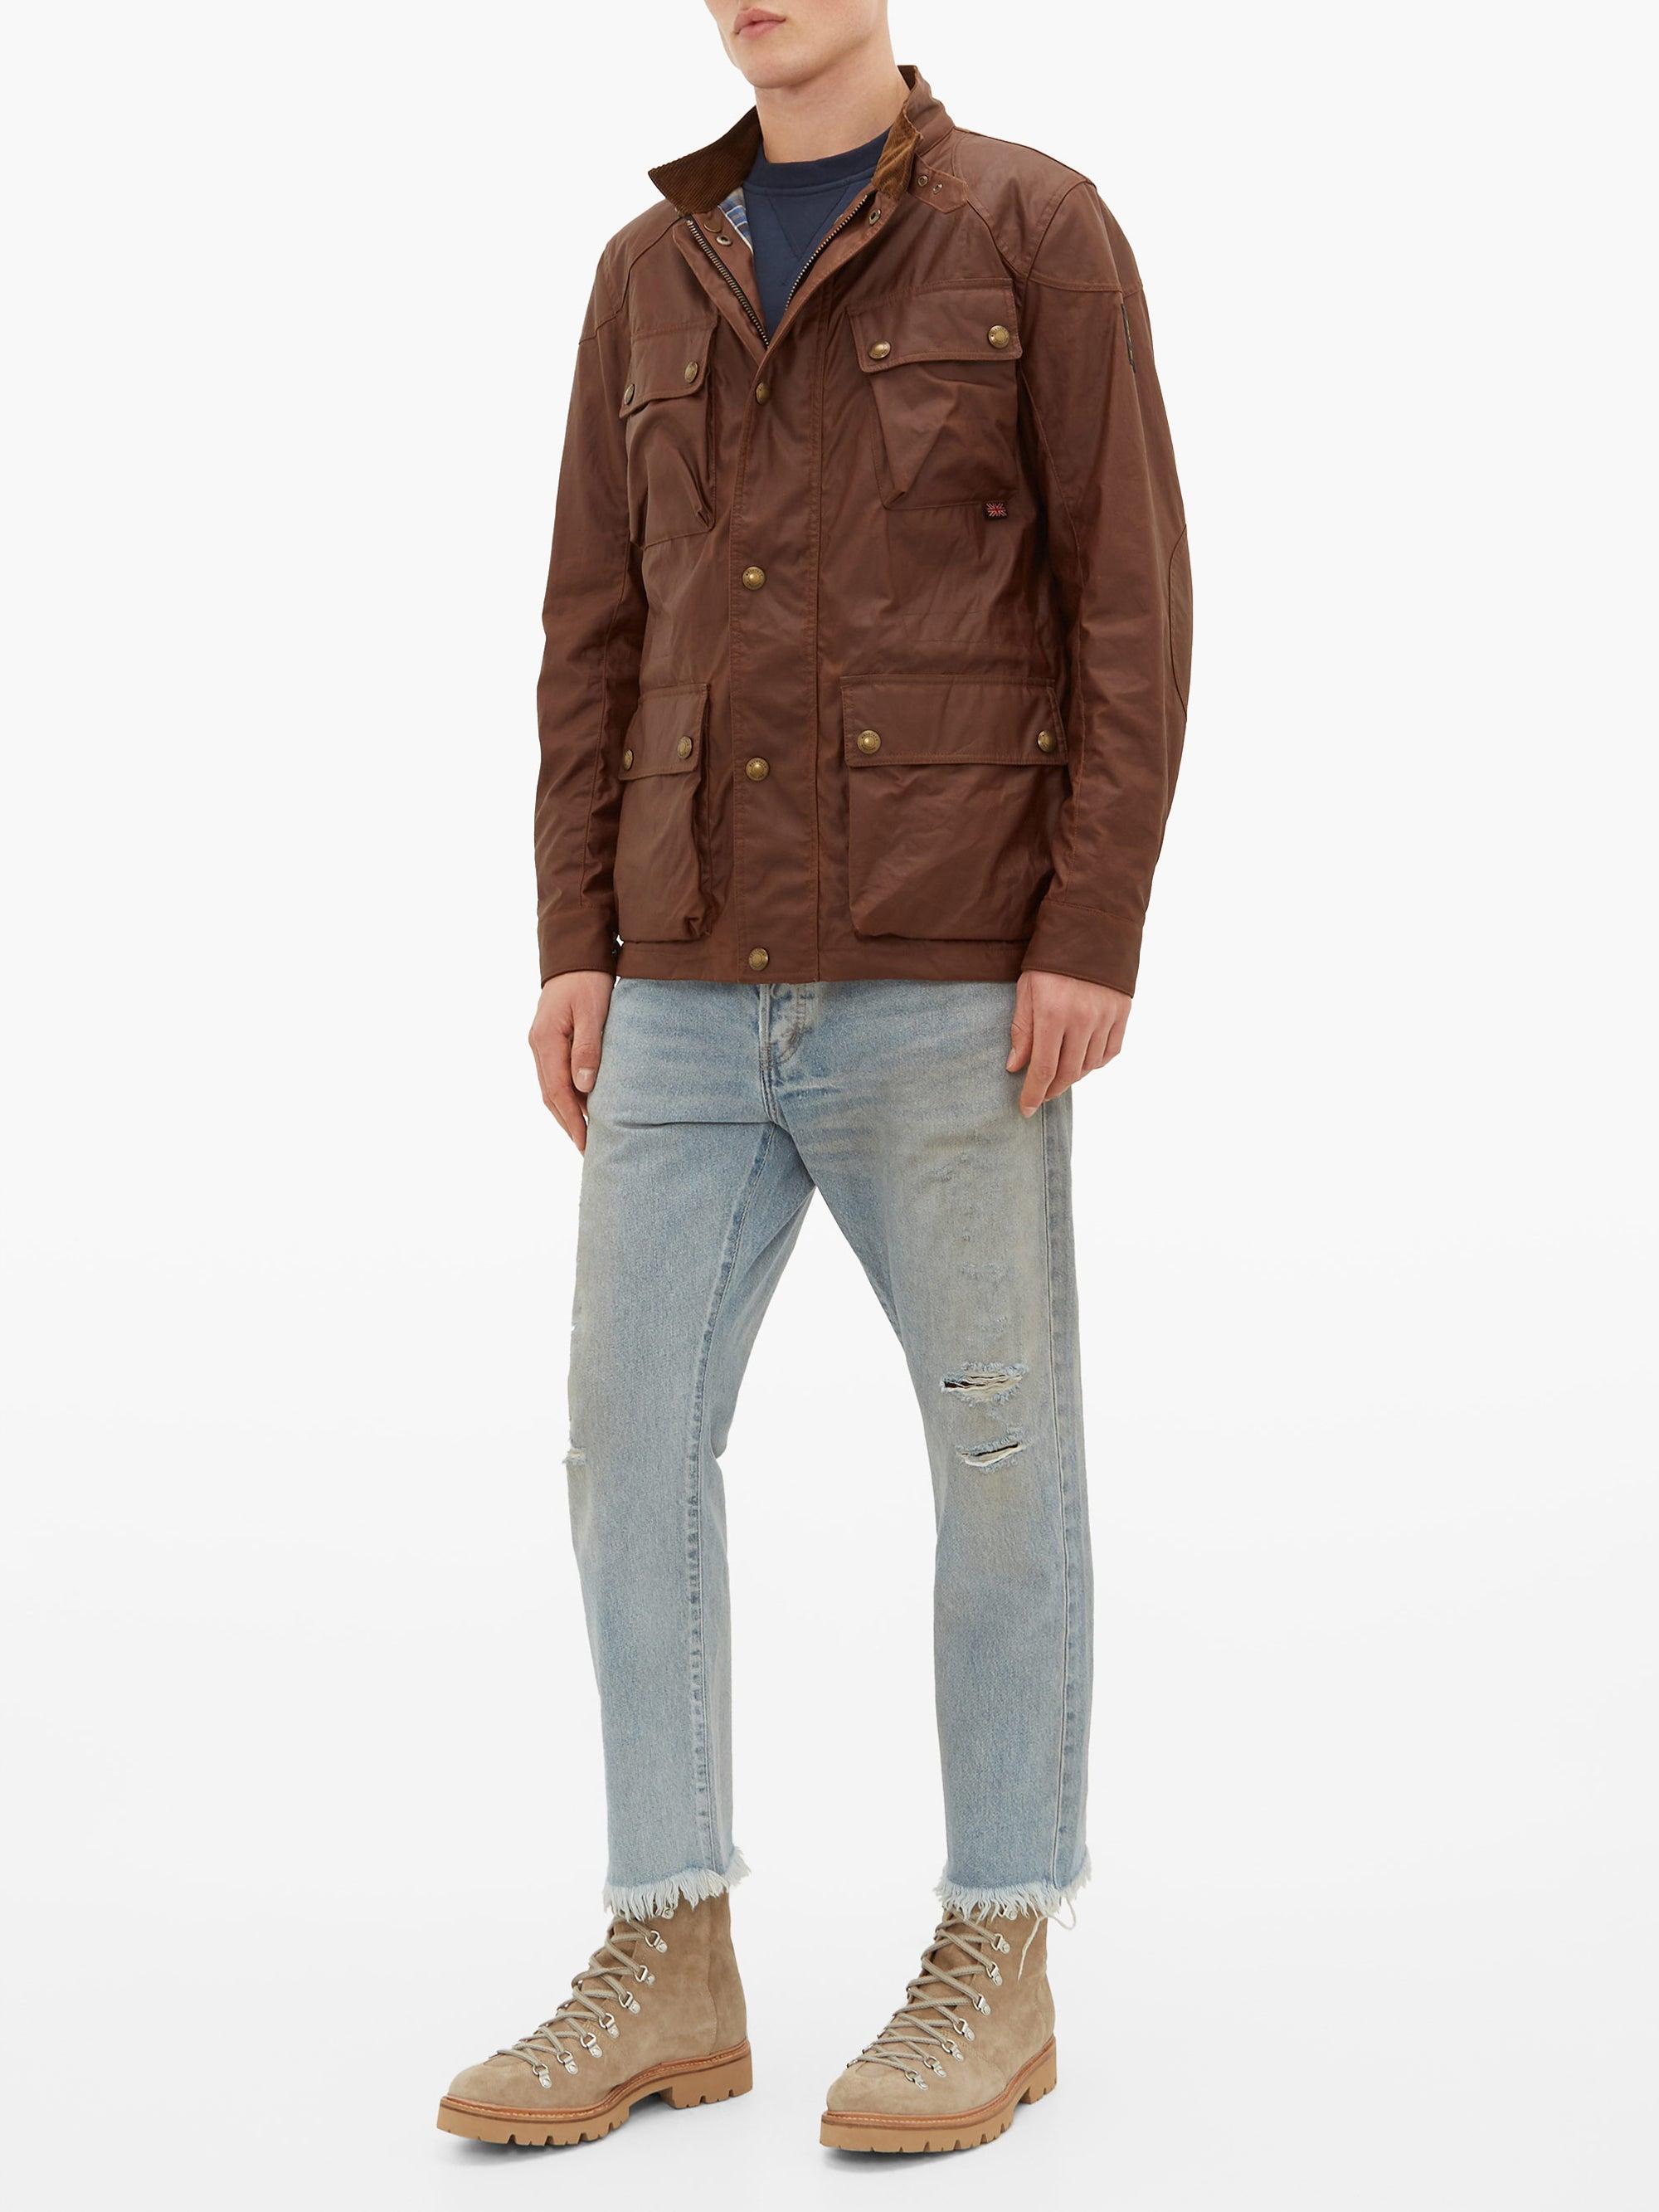 Belstaff Cotton Fieldmaster Jacket in Light Brown (Brown) for Men - Lyst